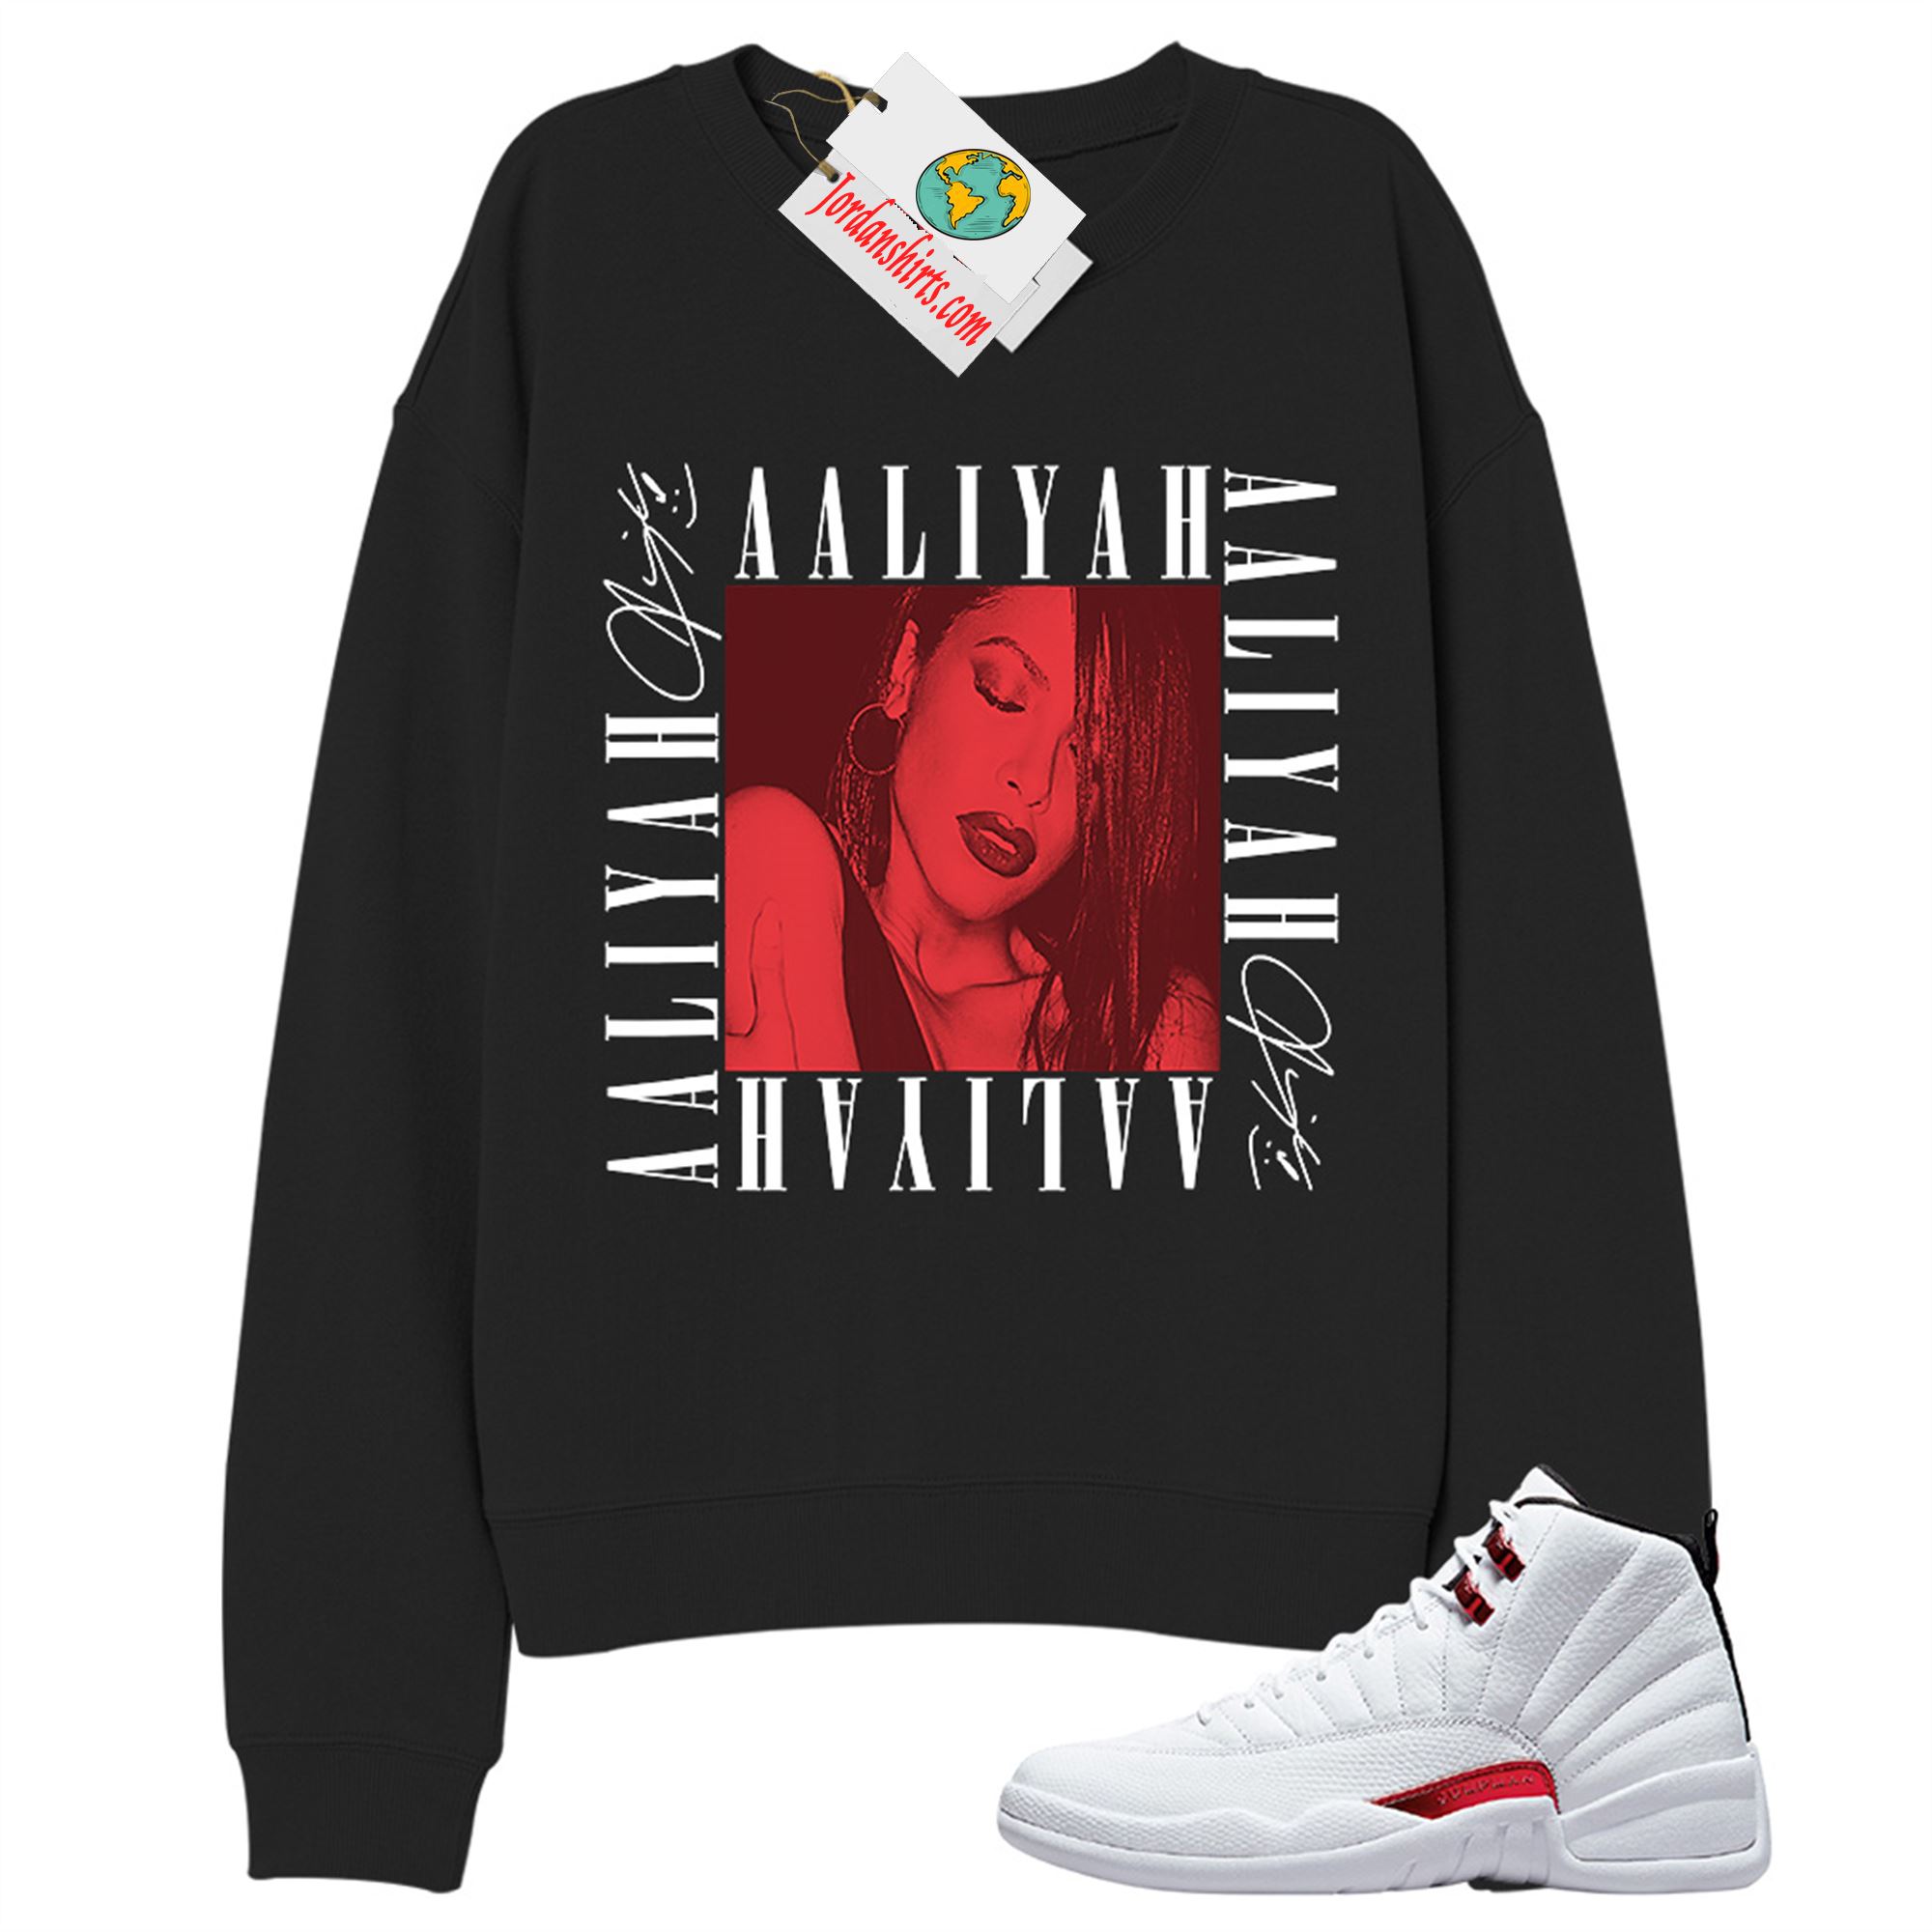 Jordan 12 Sweatshirt, Aaliyah Box Black Sweatshirt Air Jordan 12 Twist 12s Full Size Up To 5xl